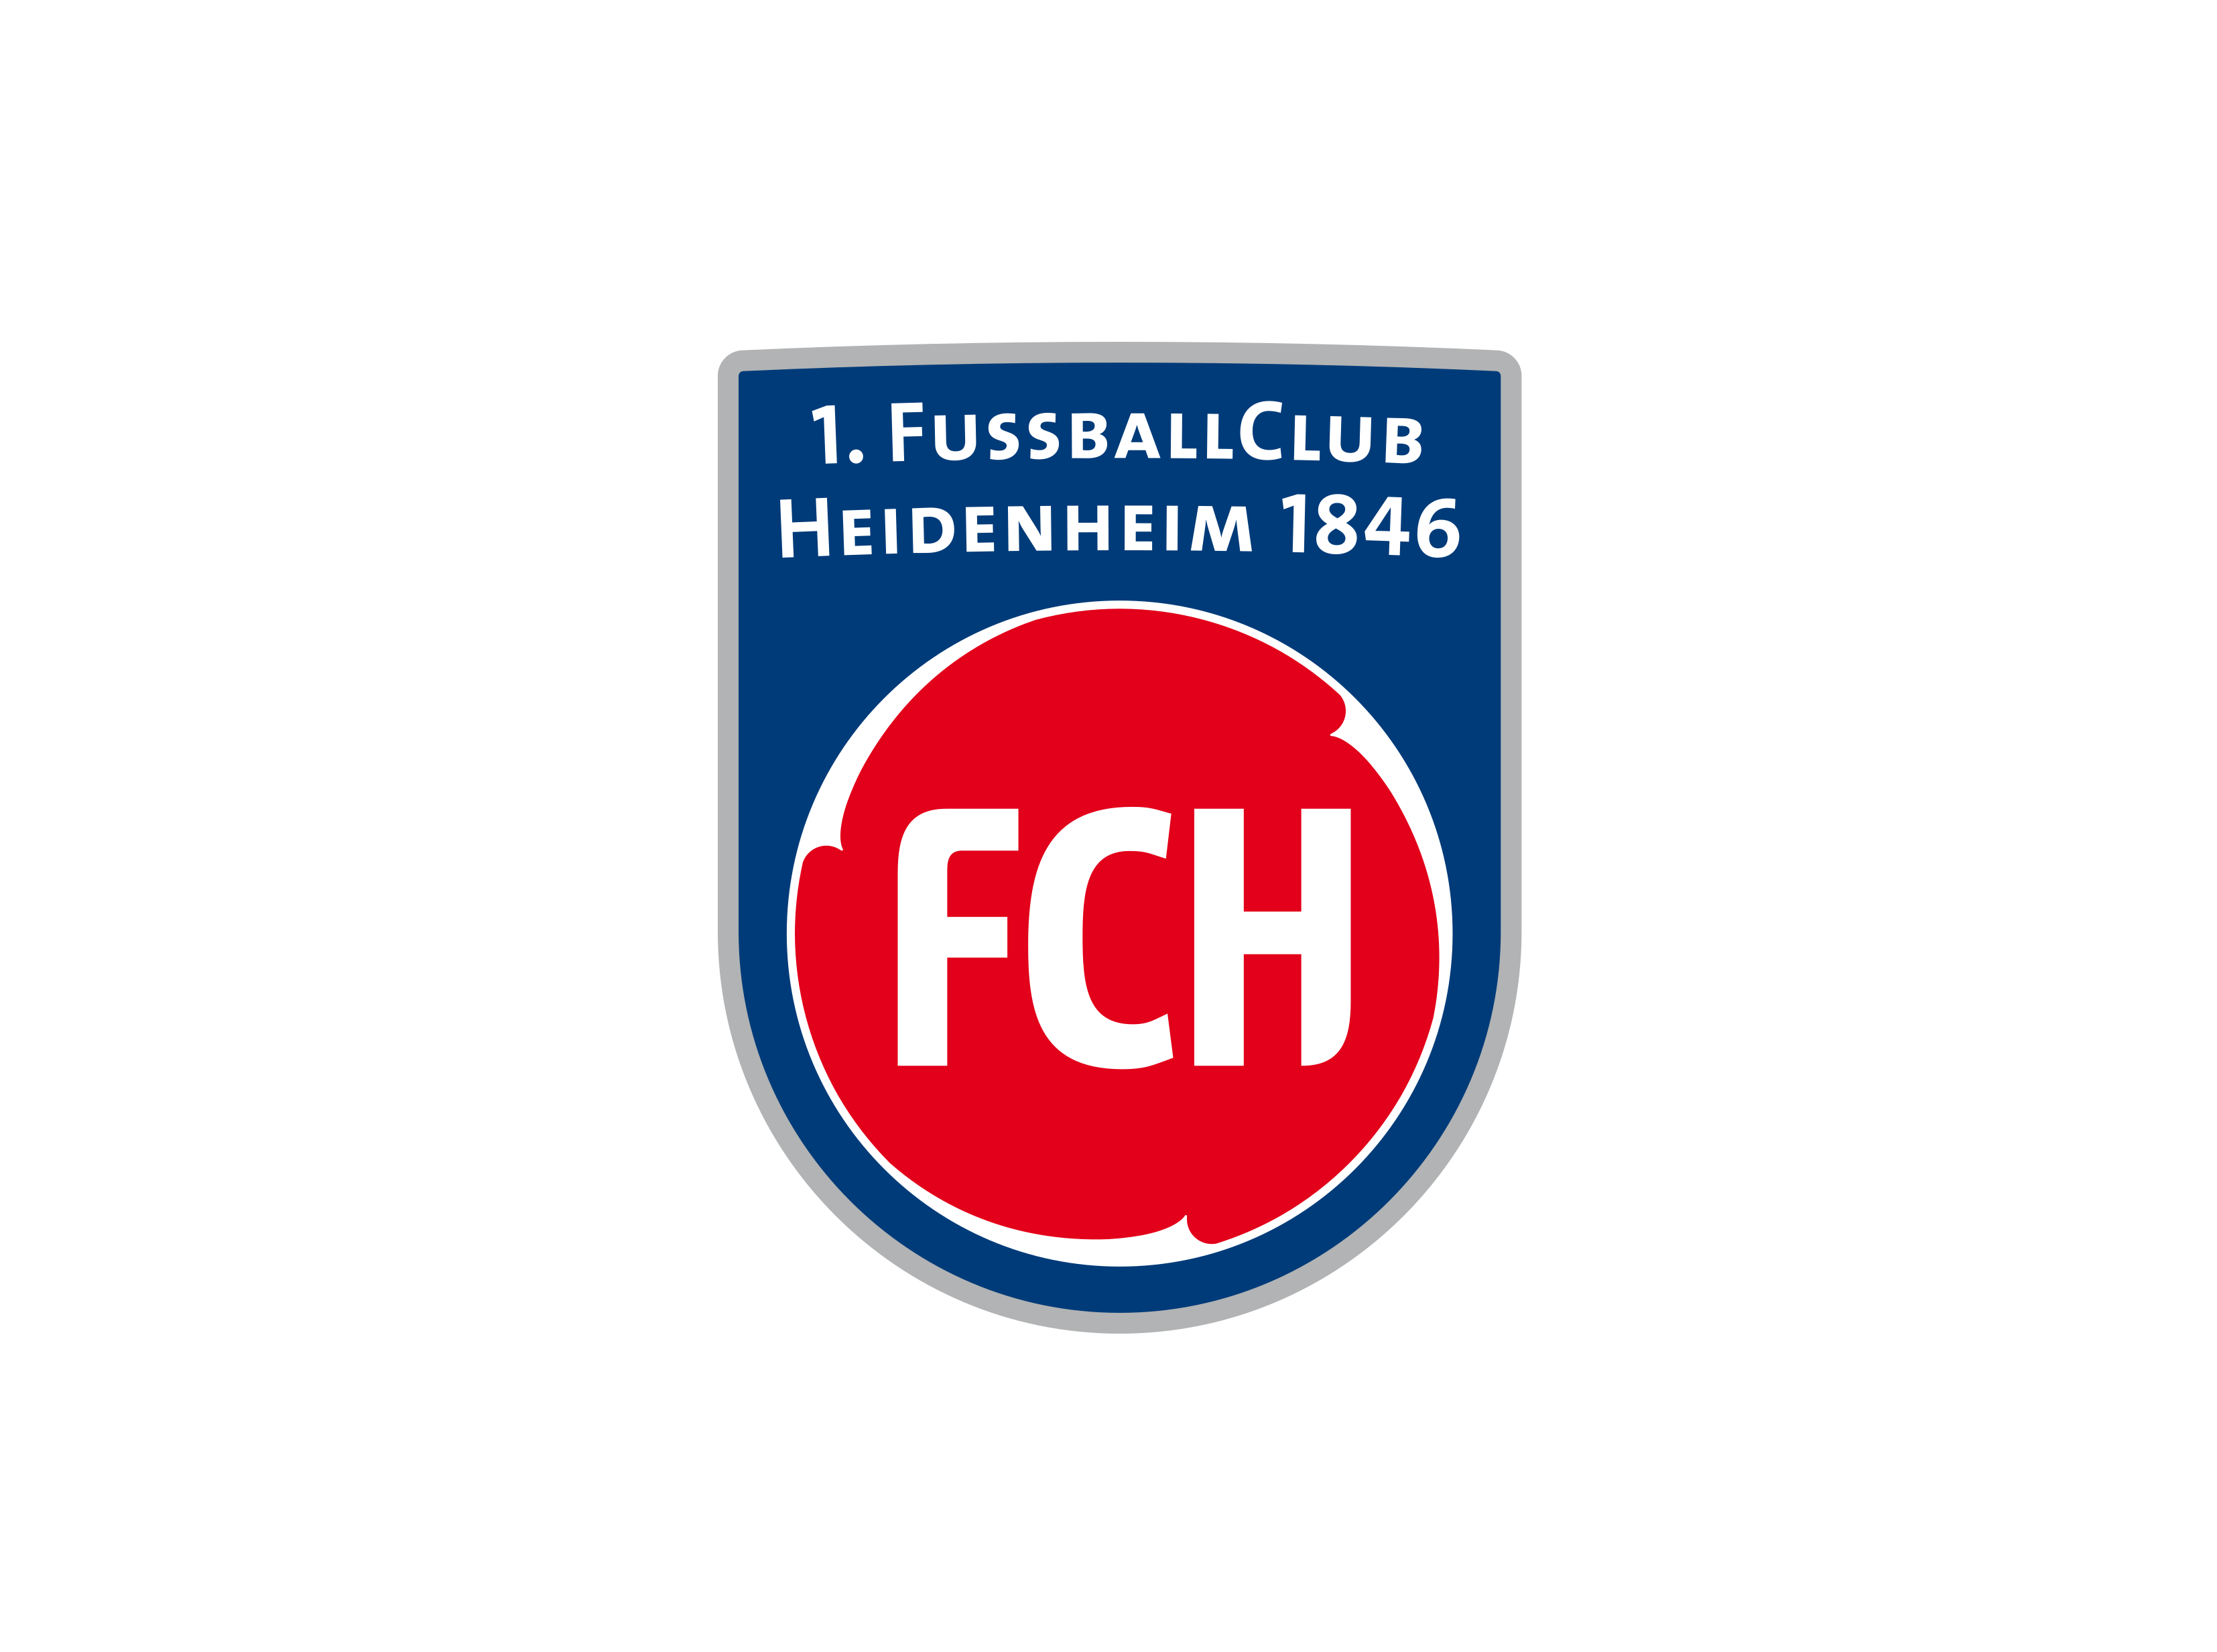   Stolzer Partner des 1. FC Heidenheim 1846 e.V.